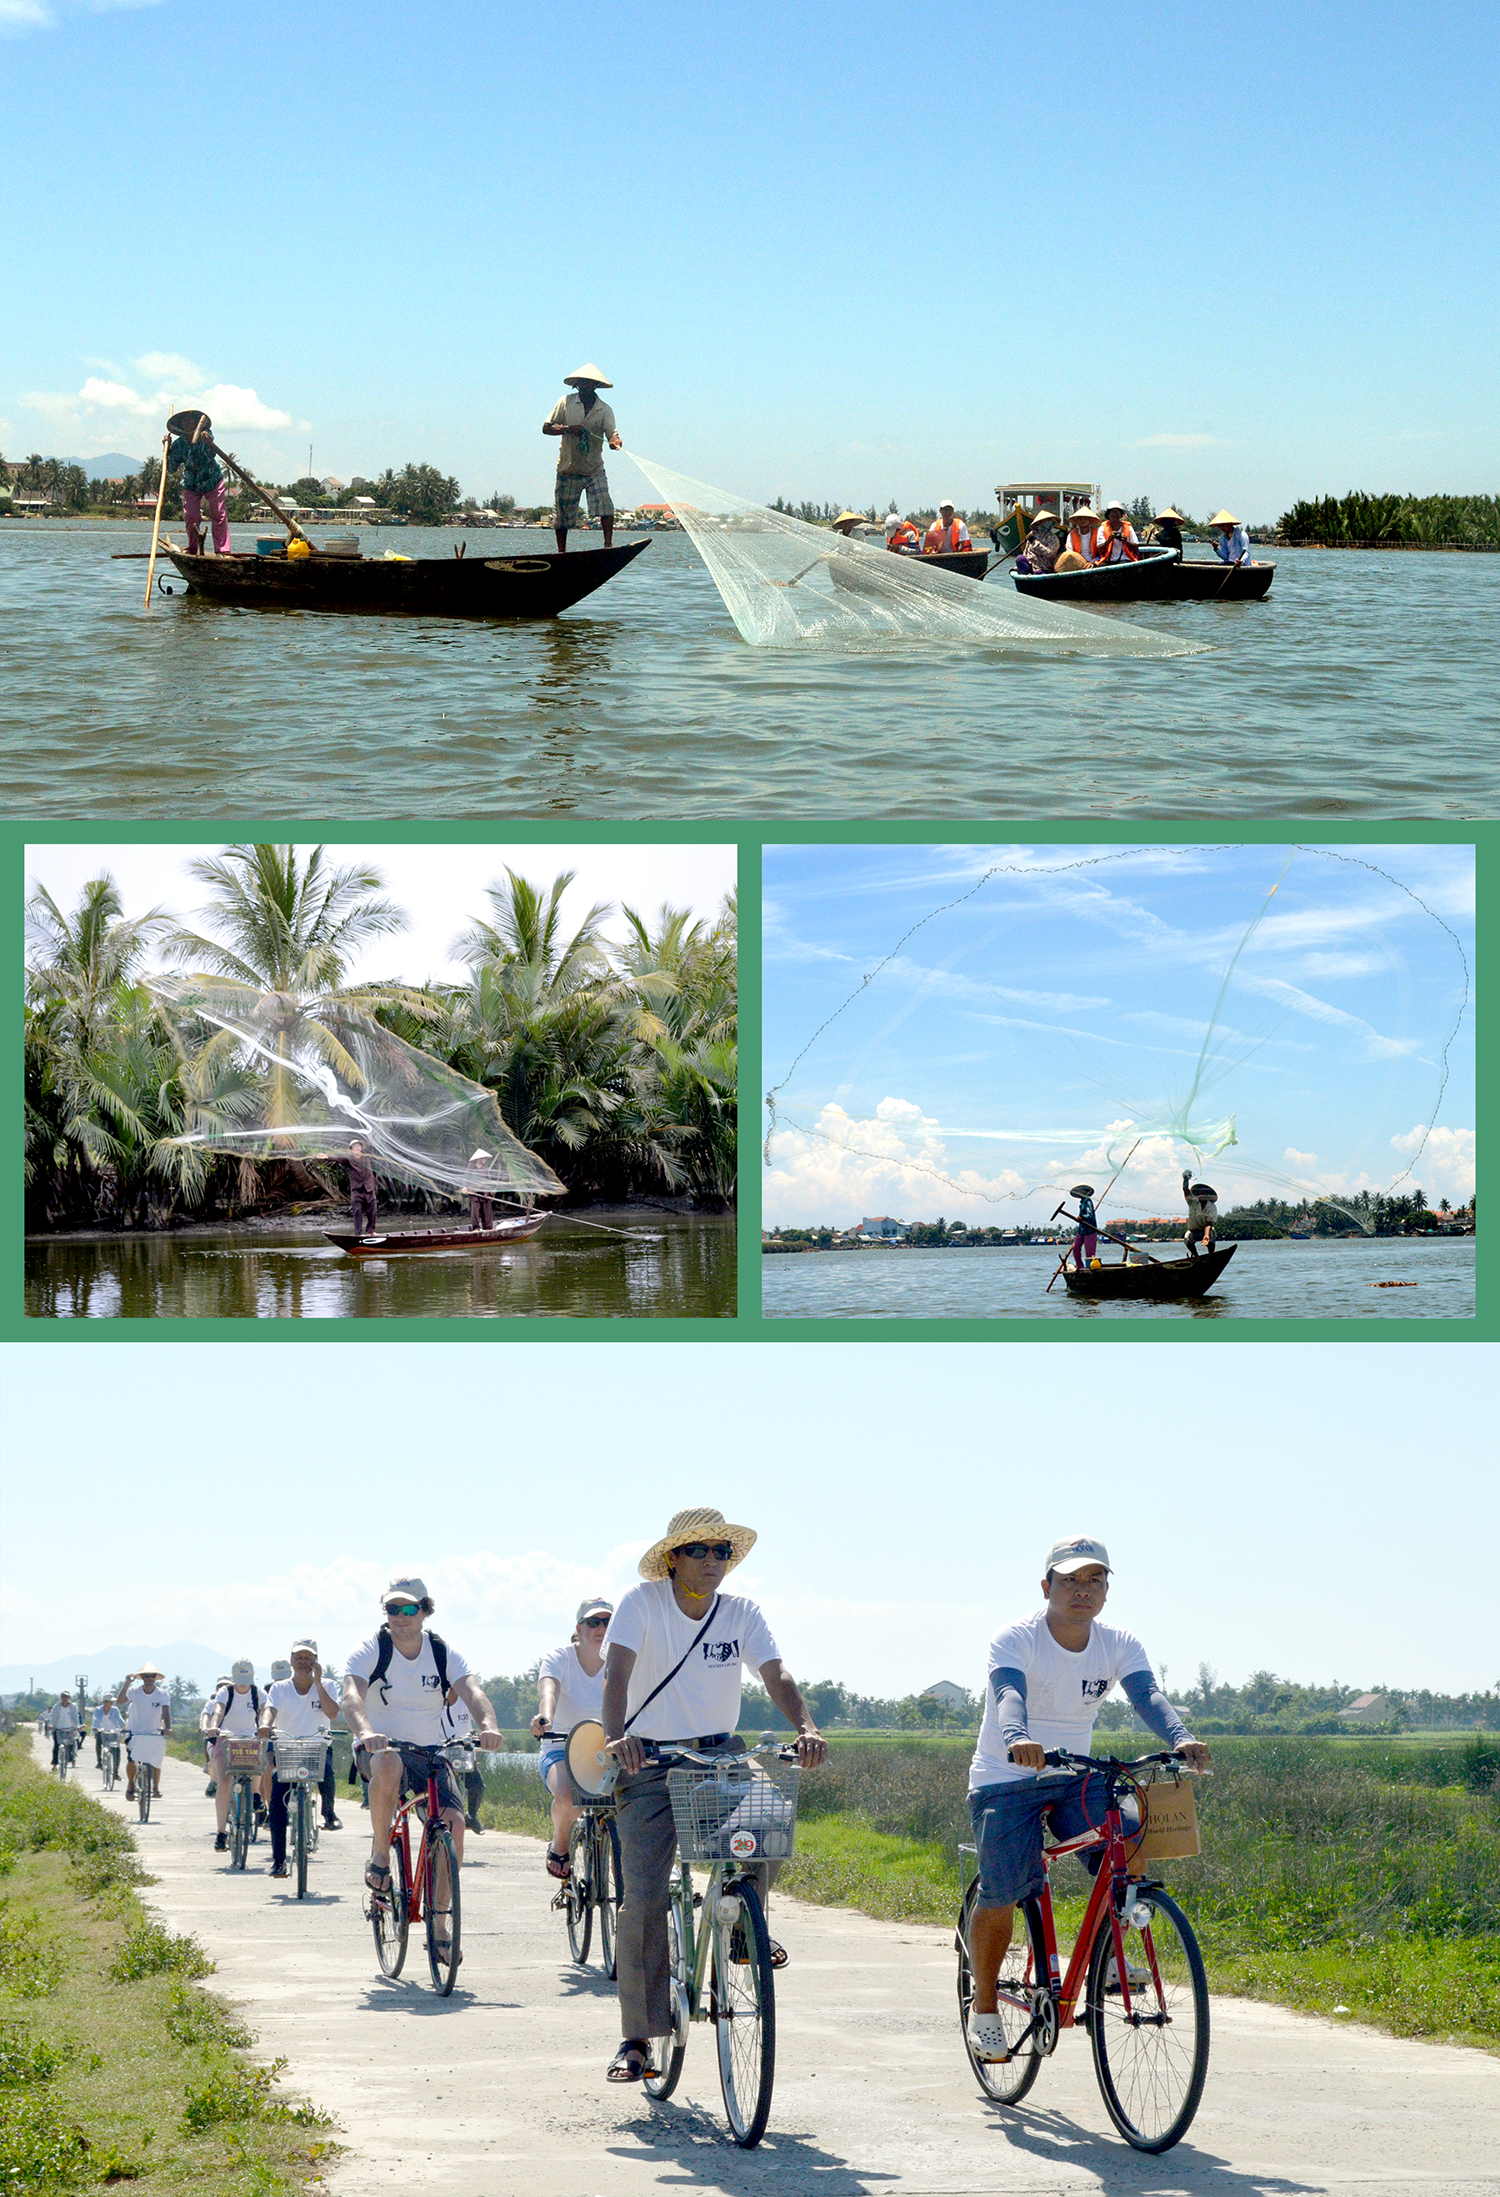 Green tourism models in Quang Nam